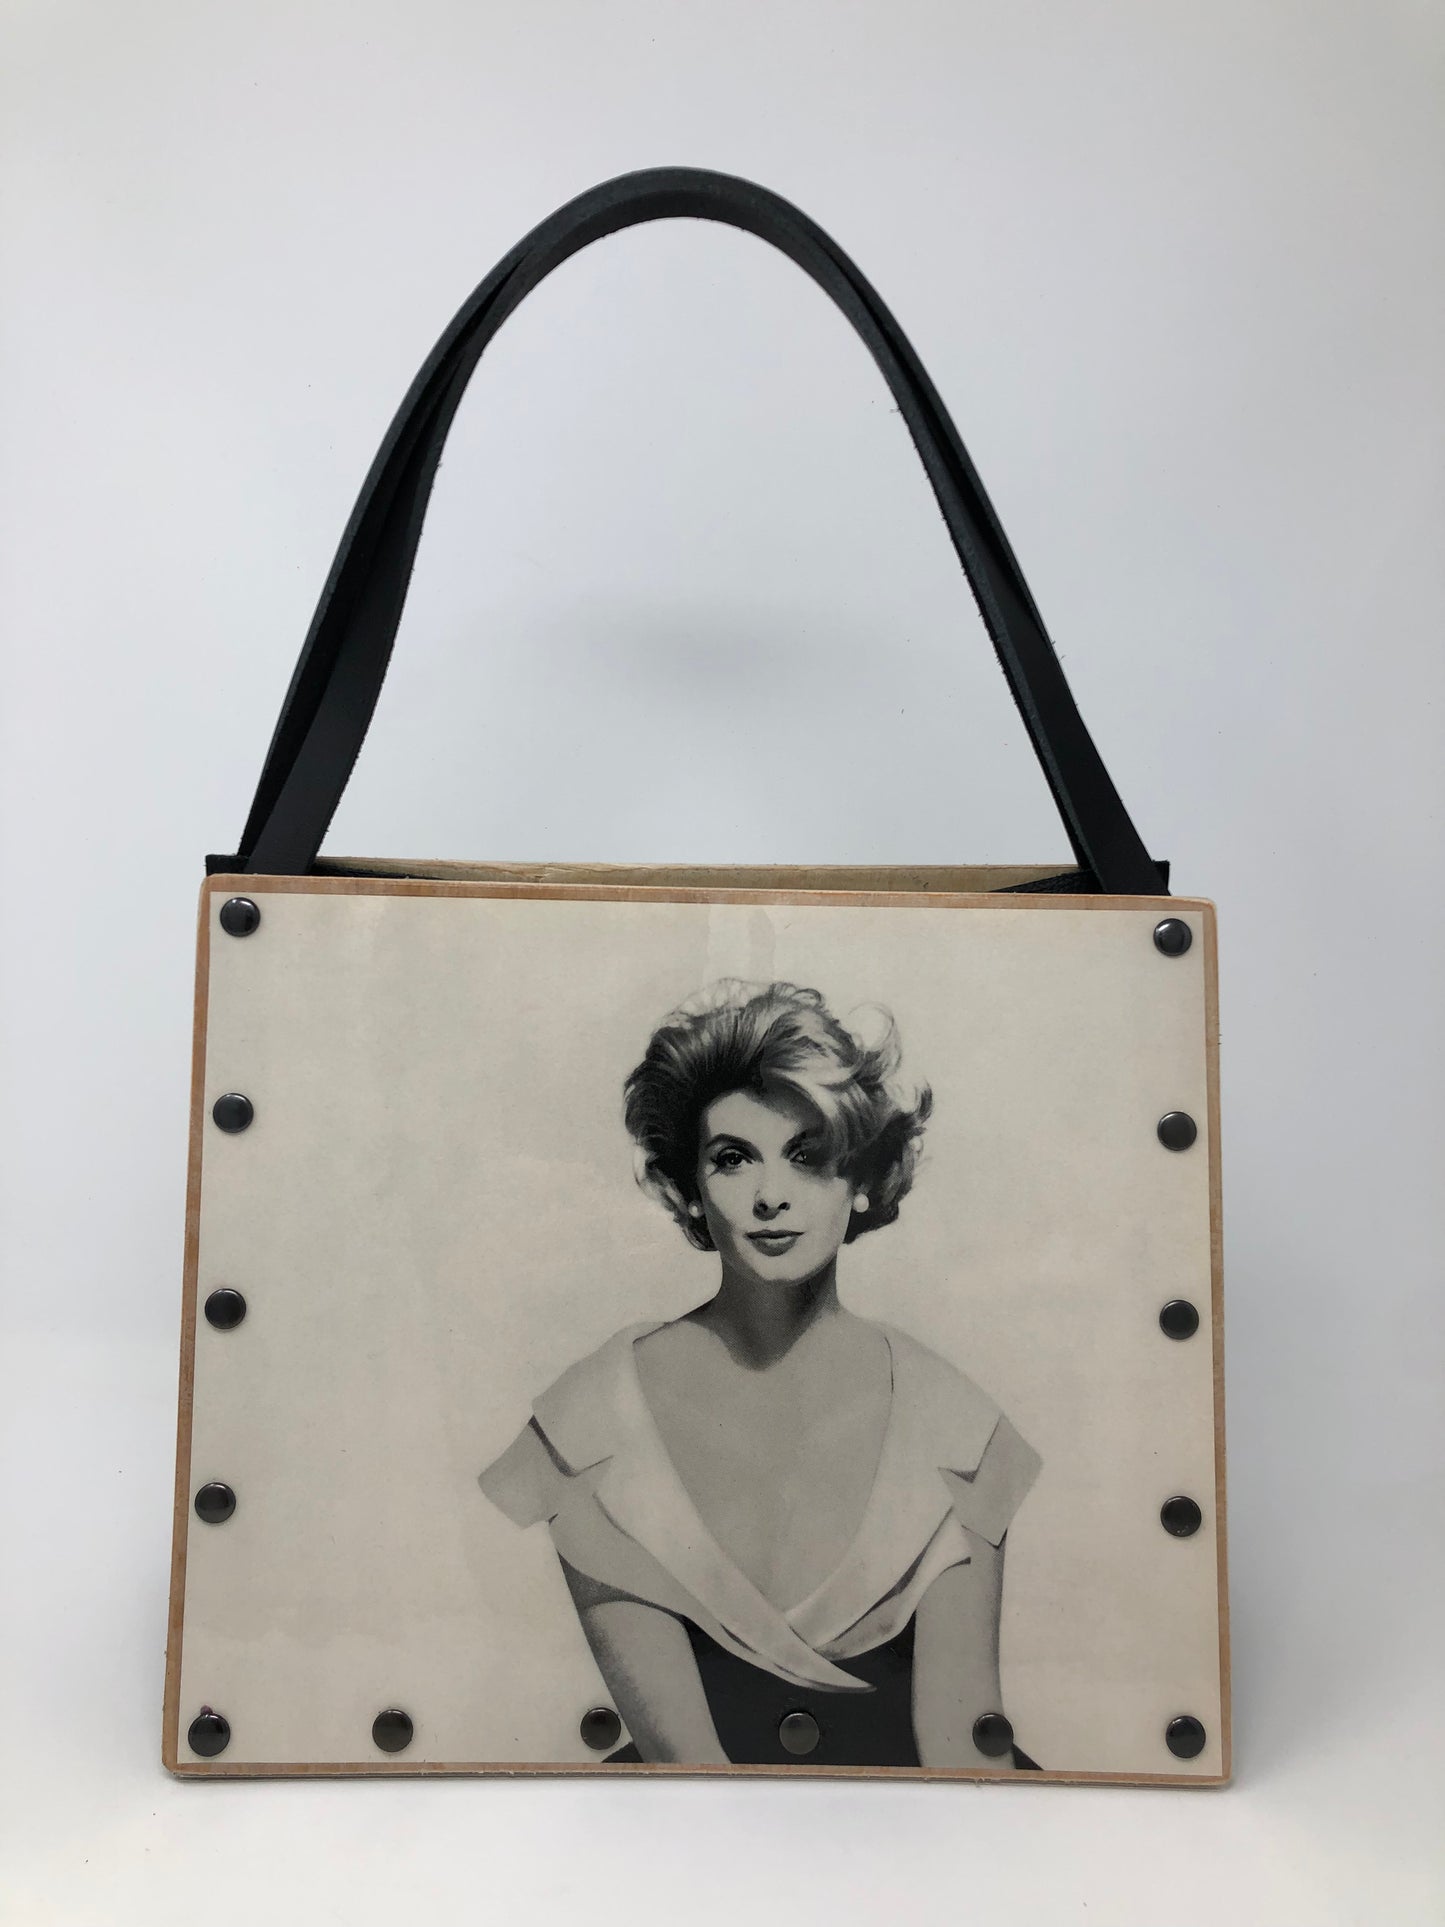 Vintage Graphics Handbag - Take the Plunge Ad from Vogue 1959